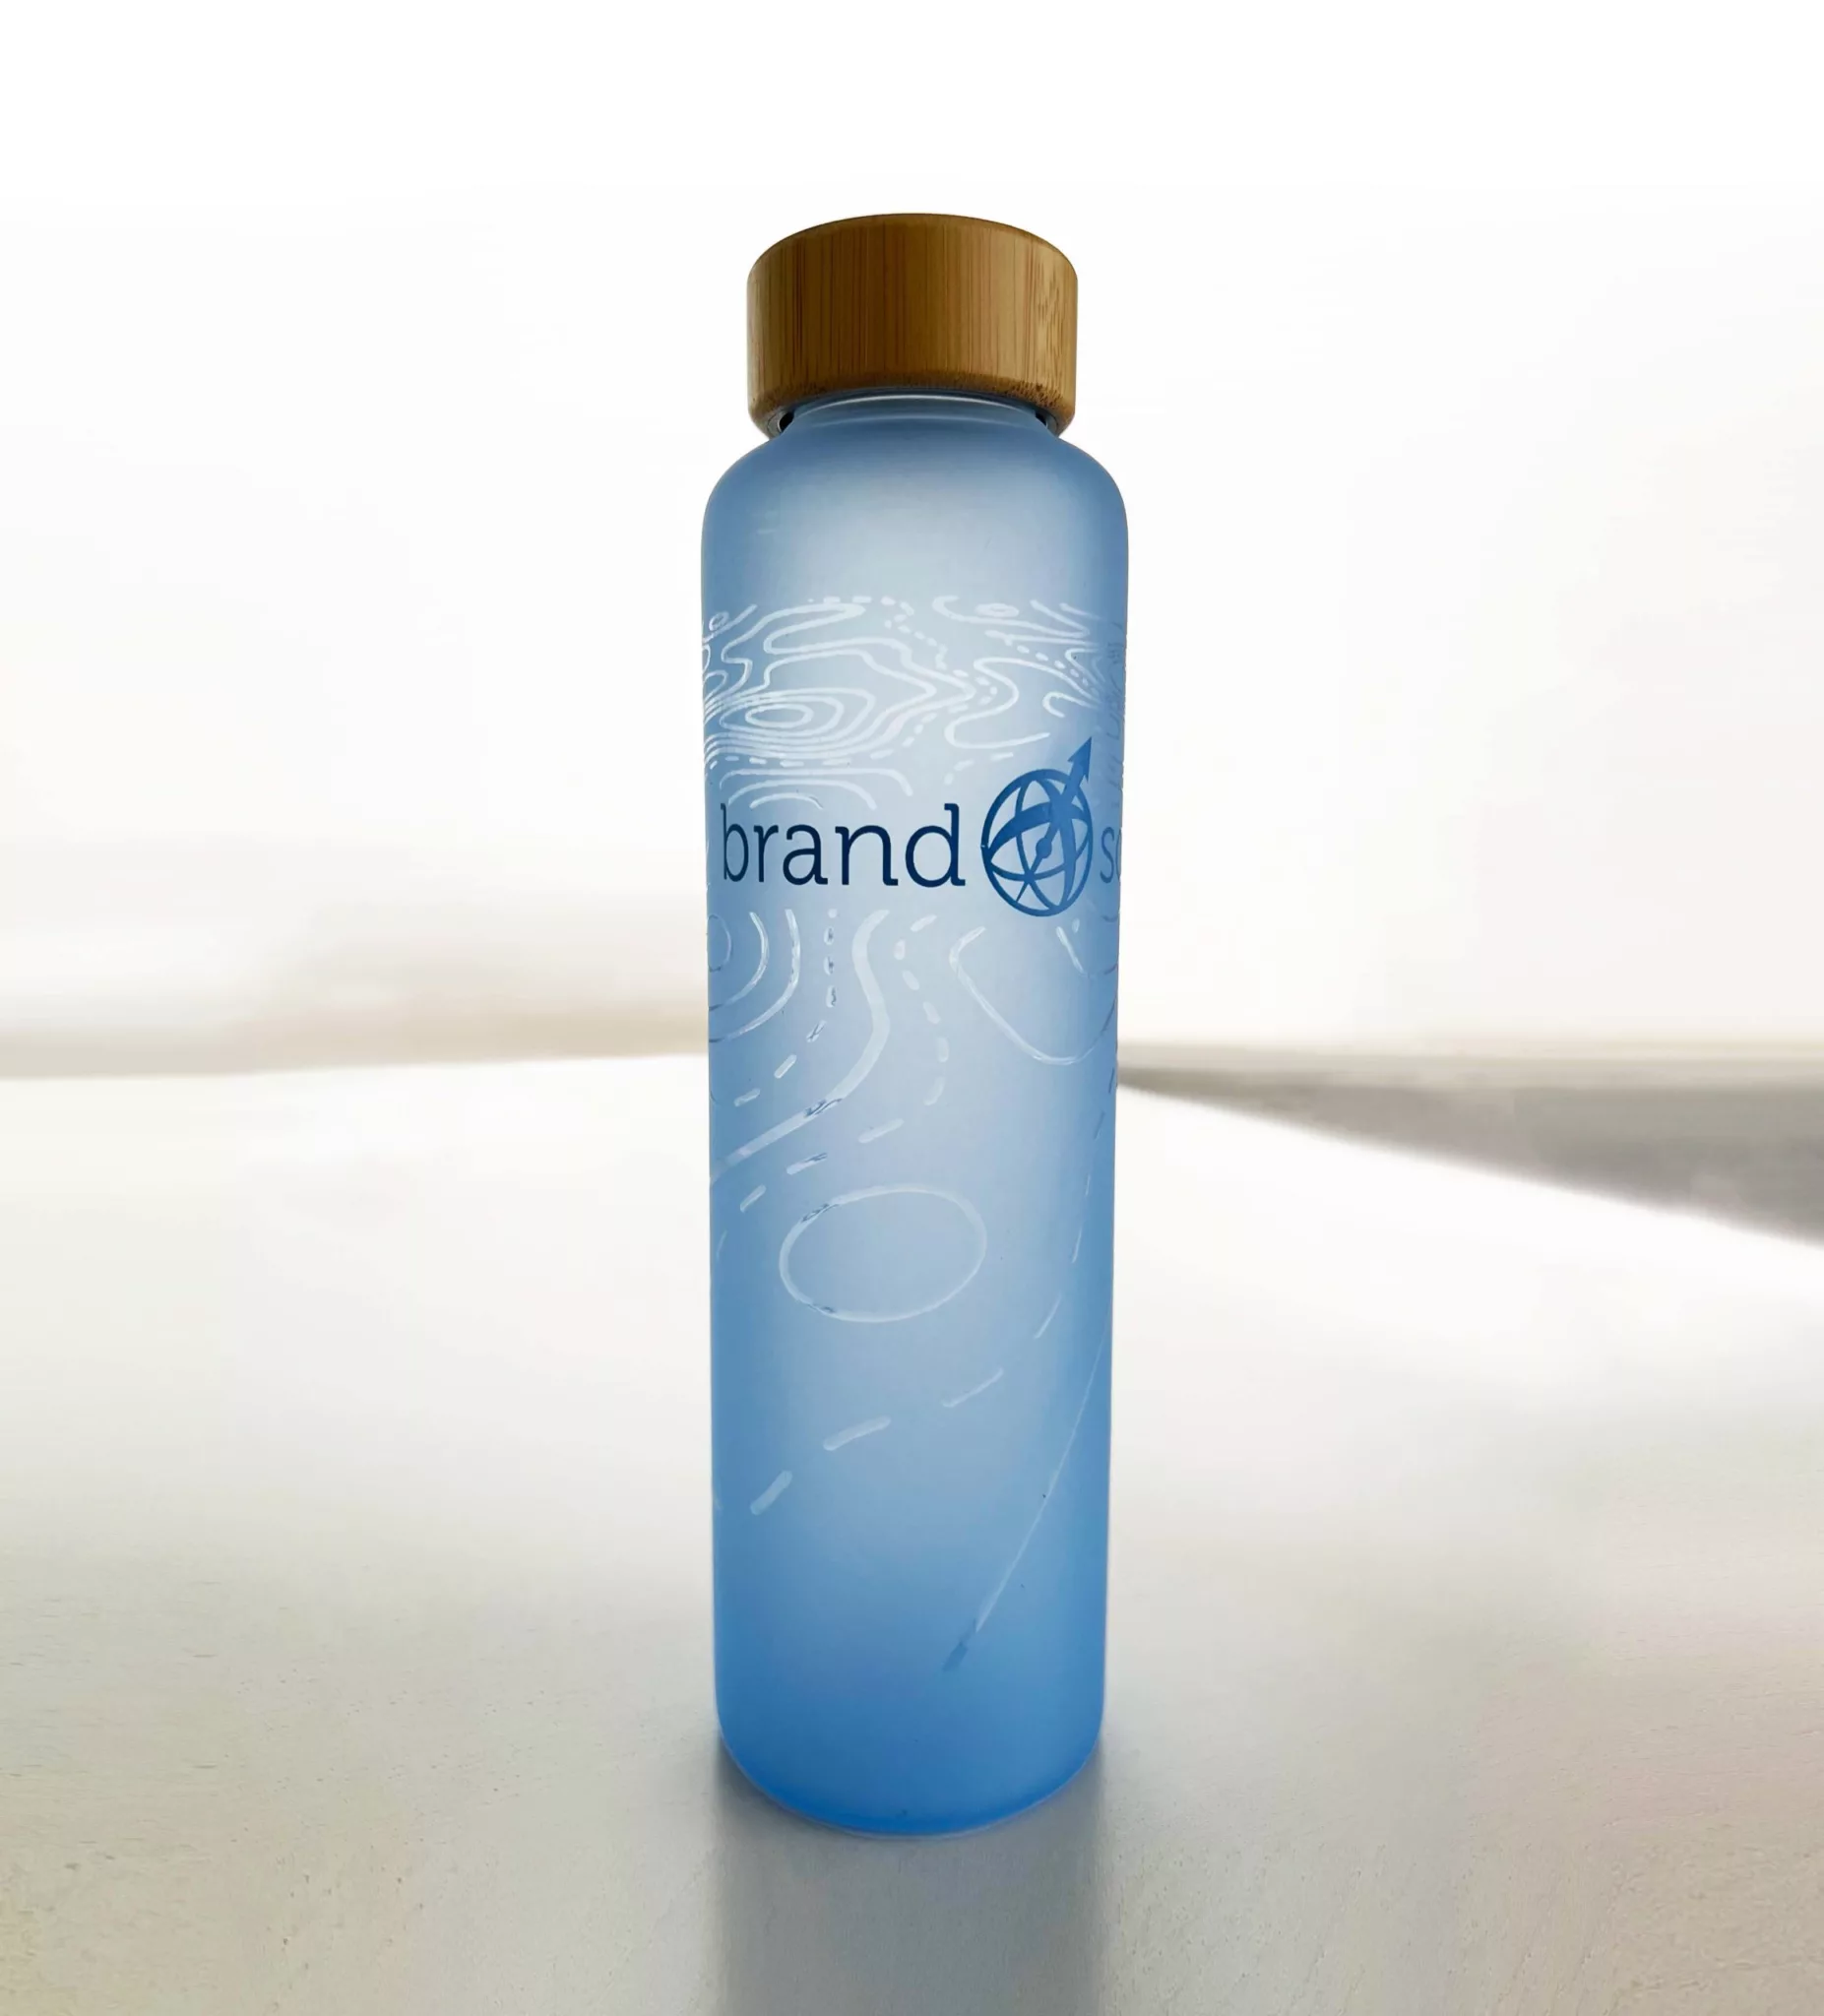 Example of merchandise bottle by Brandscape